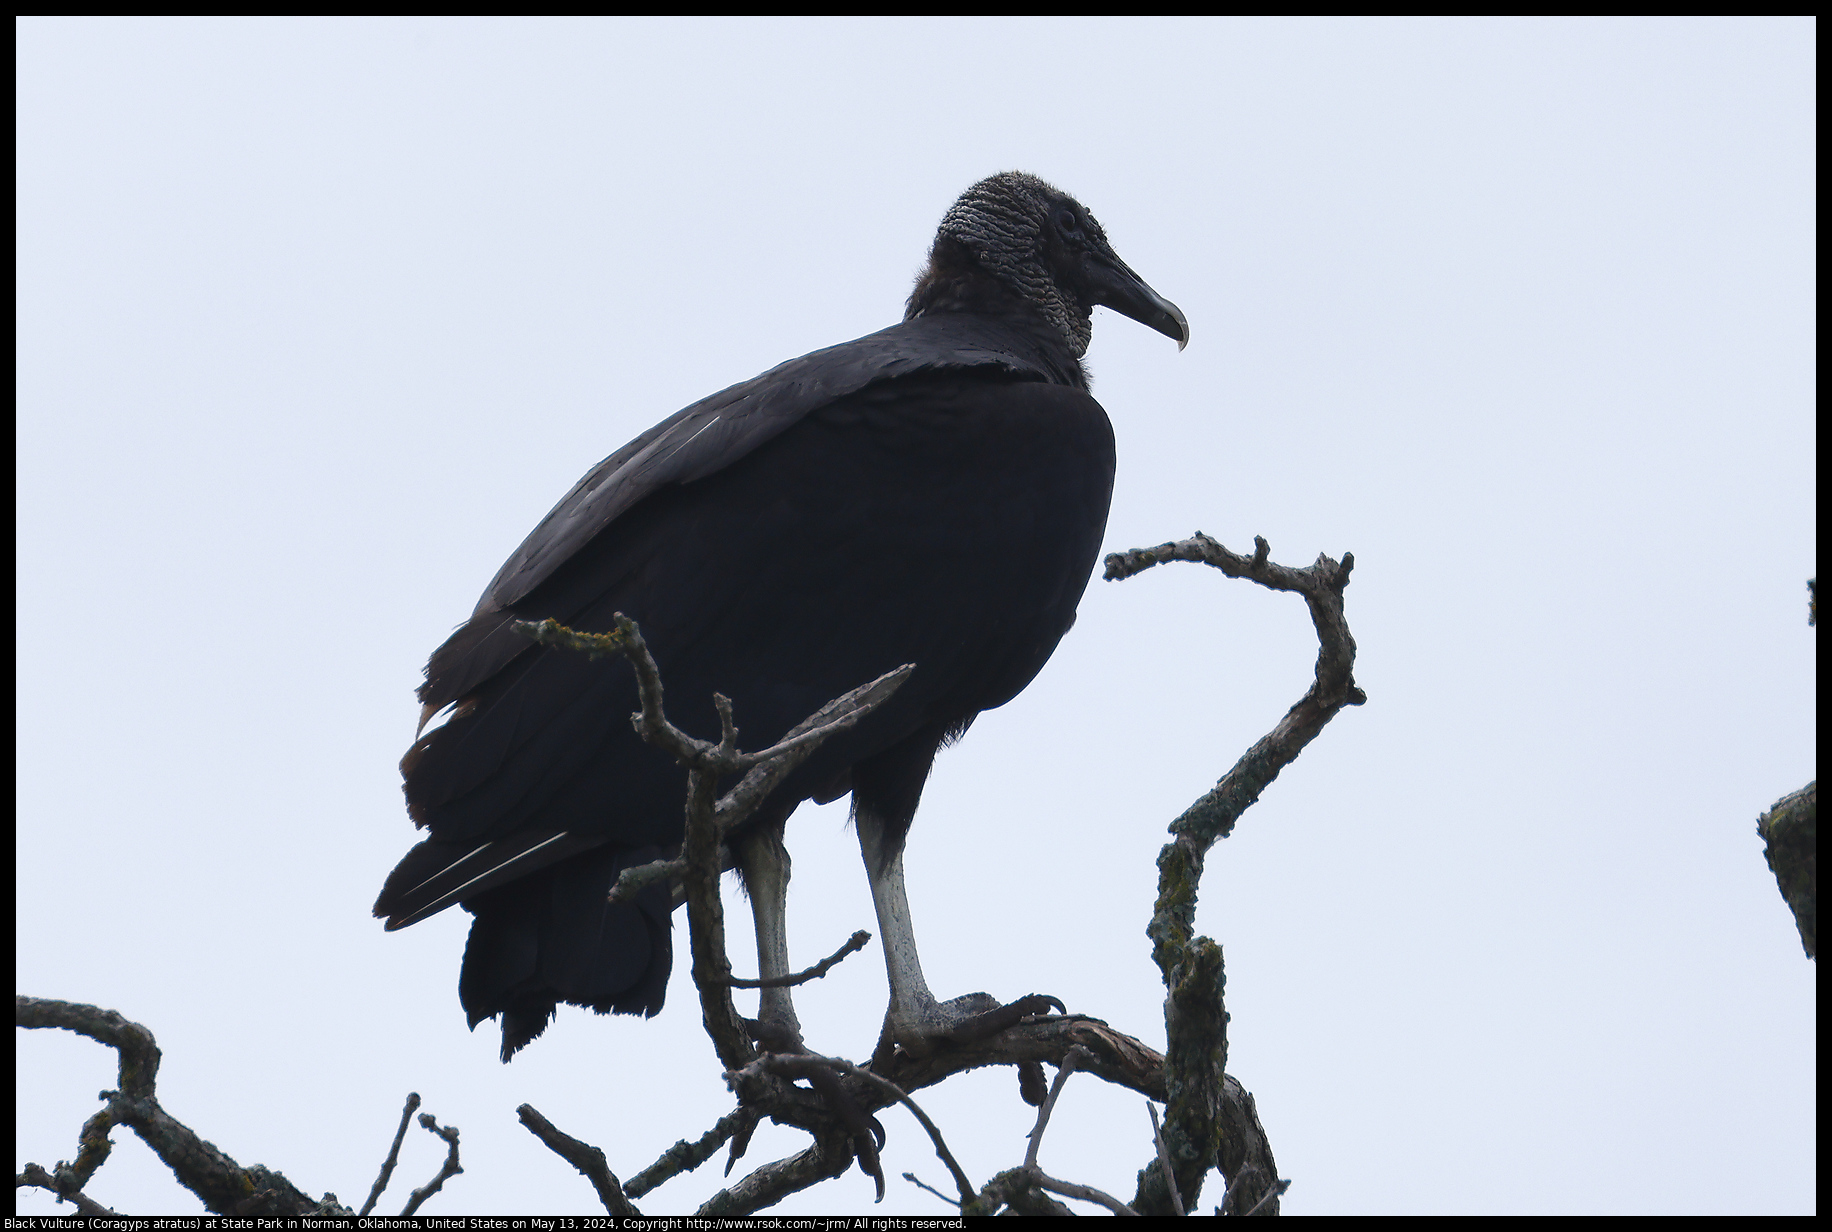 Black Vulture (Coragyps atratus) at Lake Thunderbird State Park in Norman, Oklahoma, United States on May 13, 2024